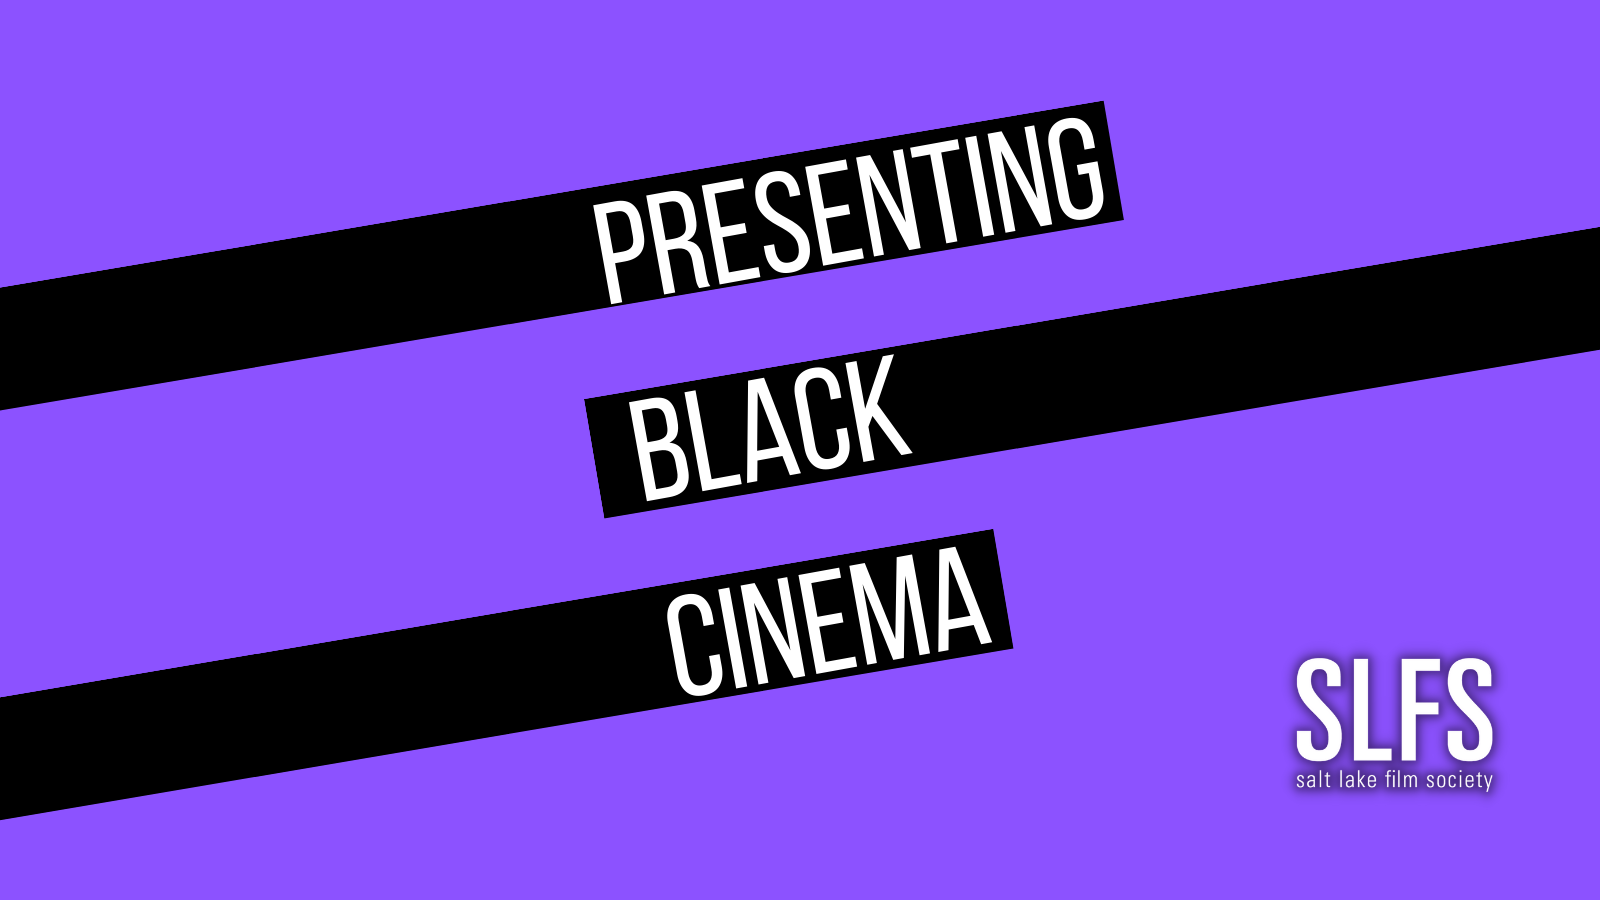 Presenting Black Cinema starting February 3